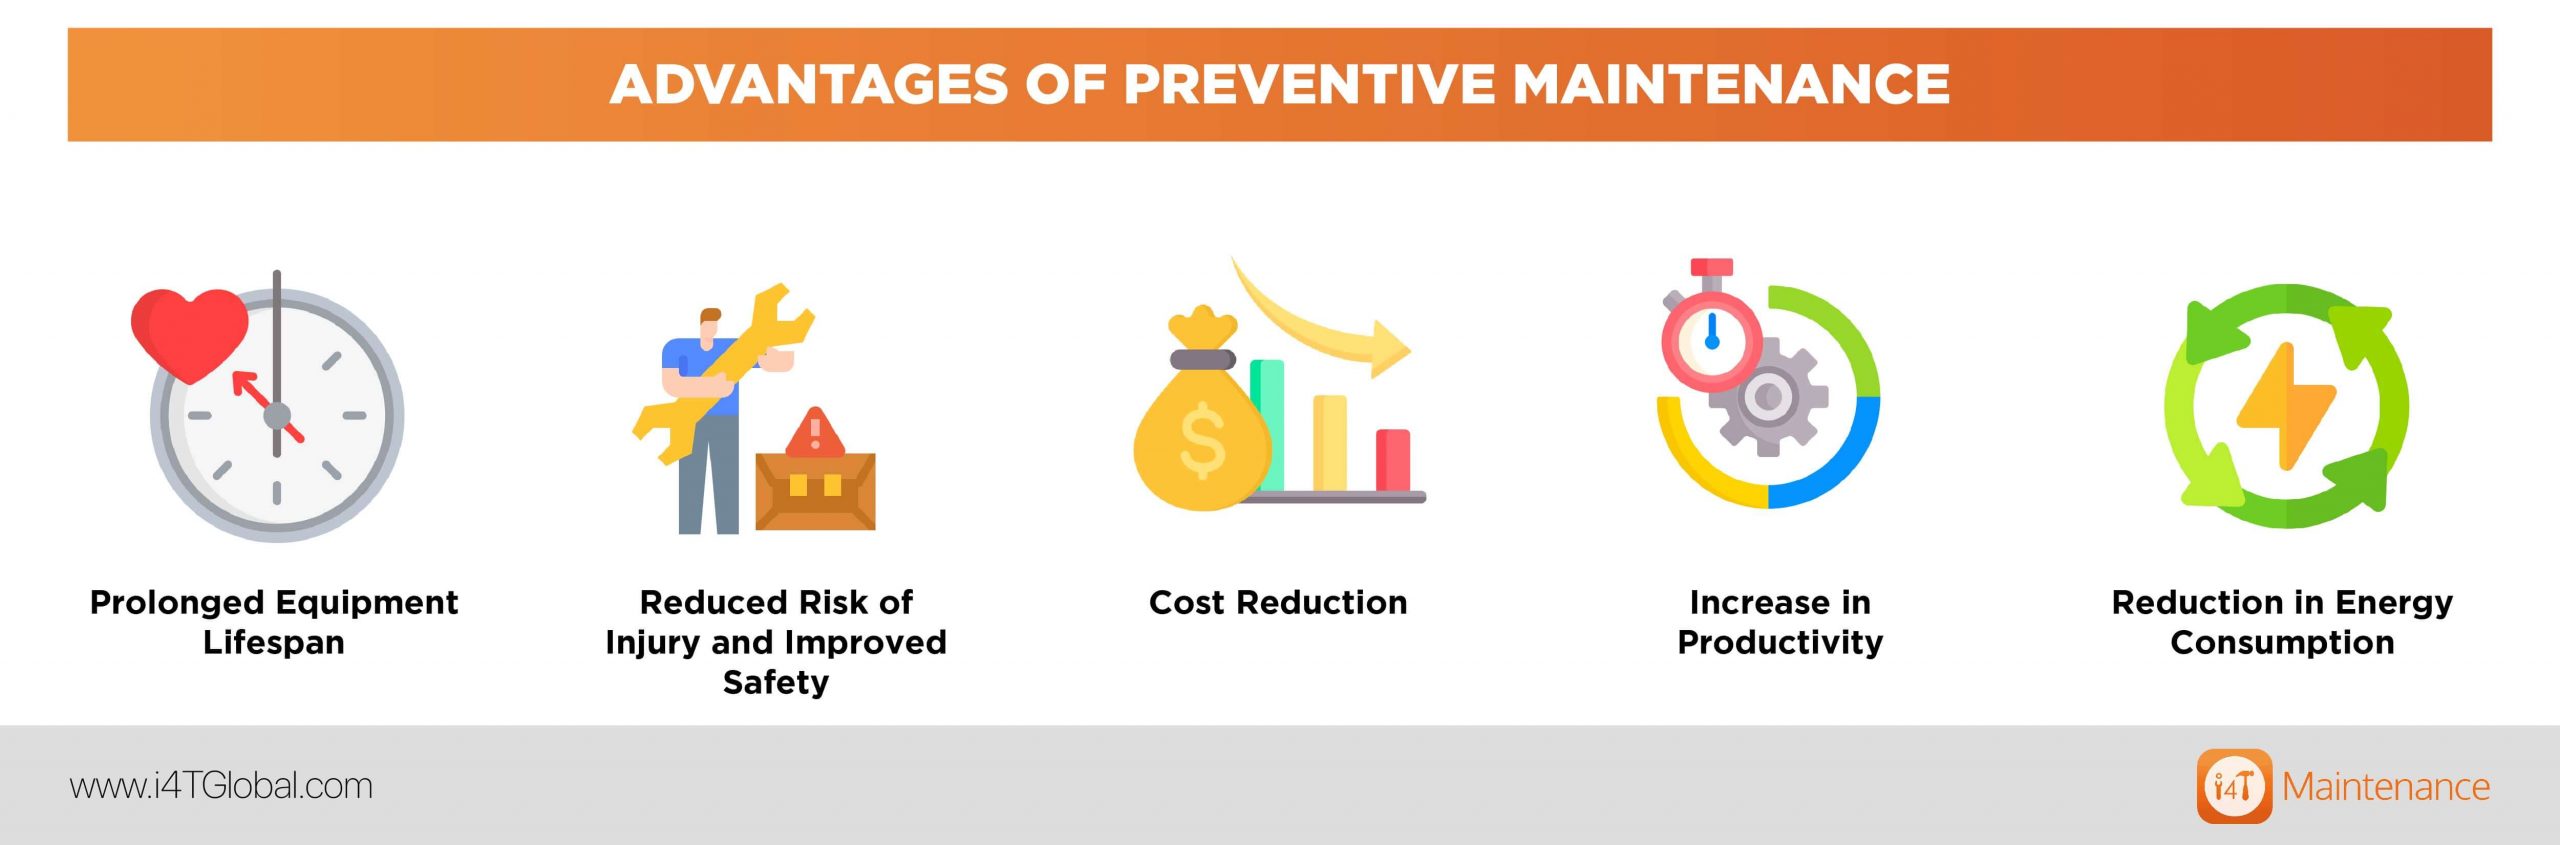 5 Advantages of preventive maintenance - i4T Global